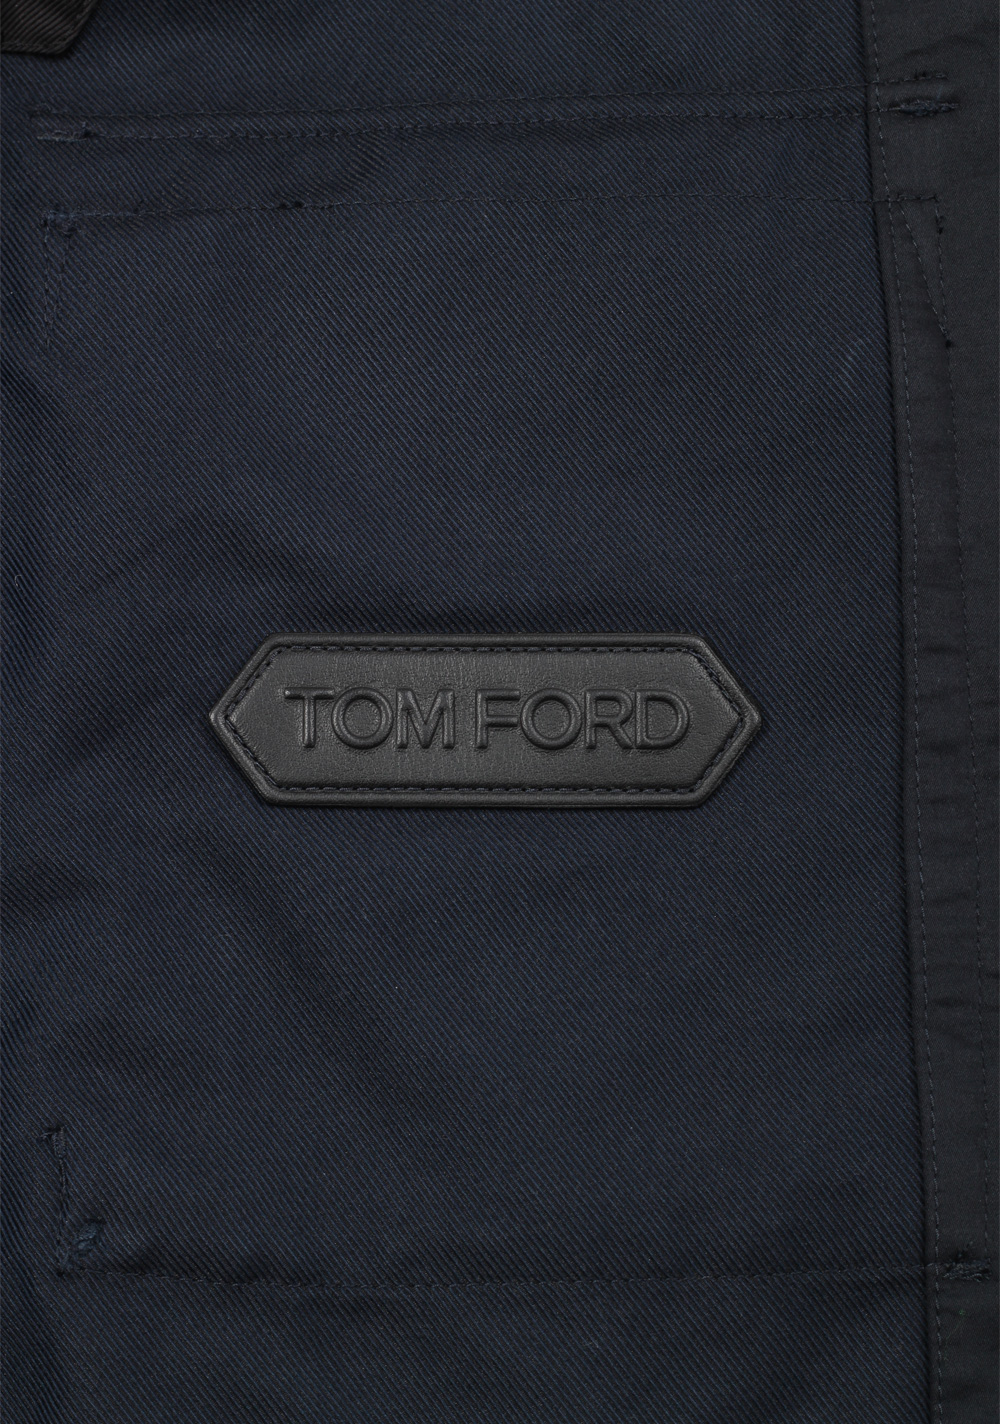 TOM FORD Blue Military Field James Bond Jacket Coat Size 48 / 38R U.S. Outerwear | Costume Limité